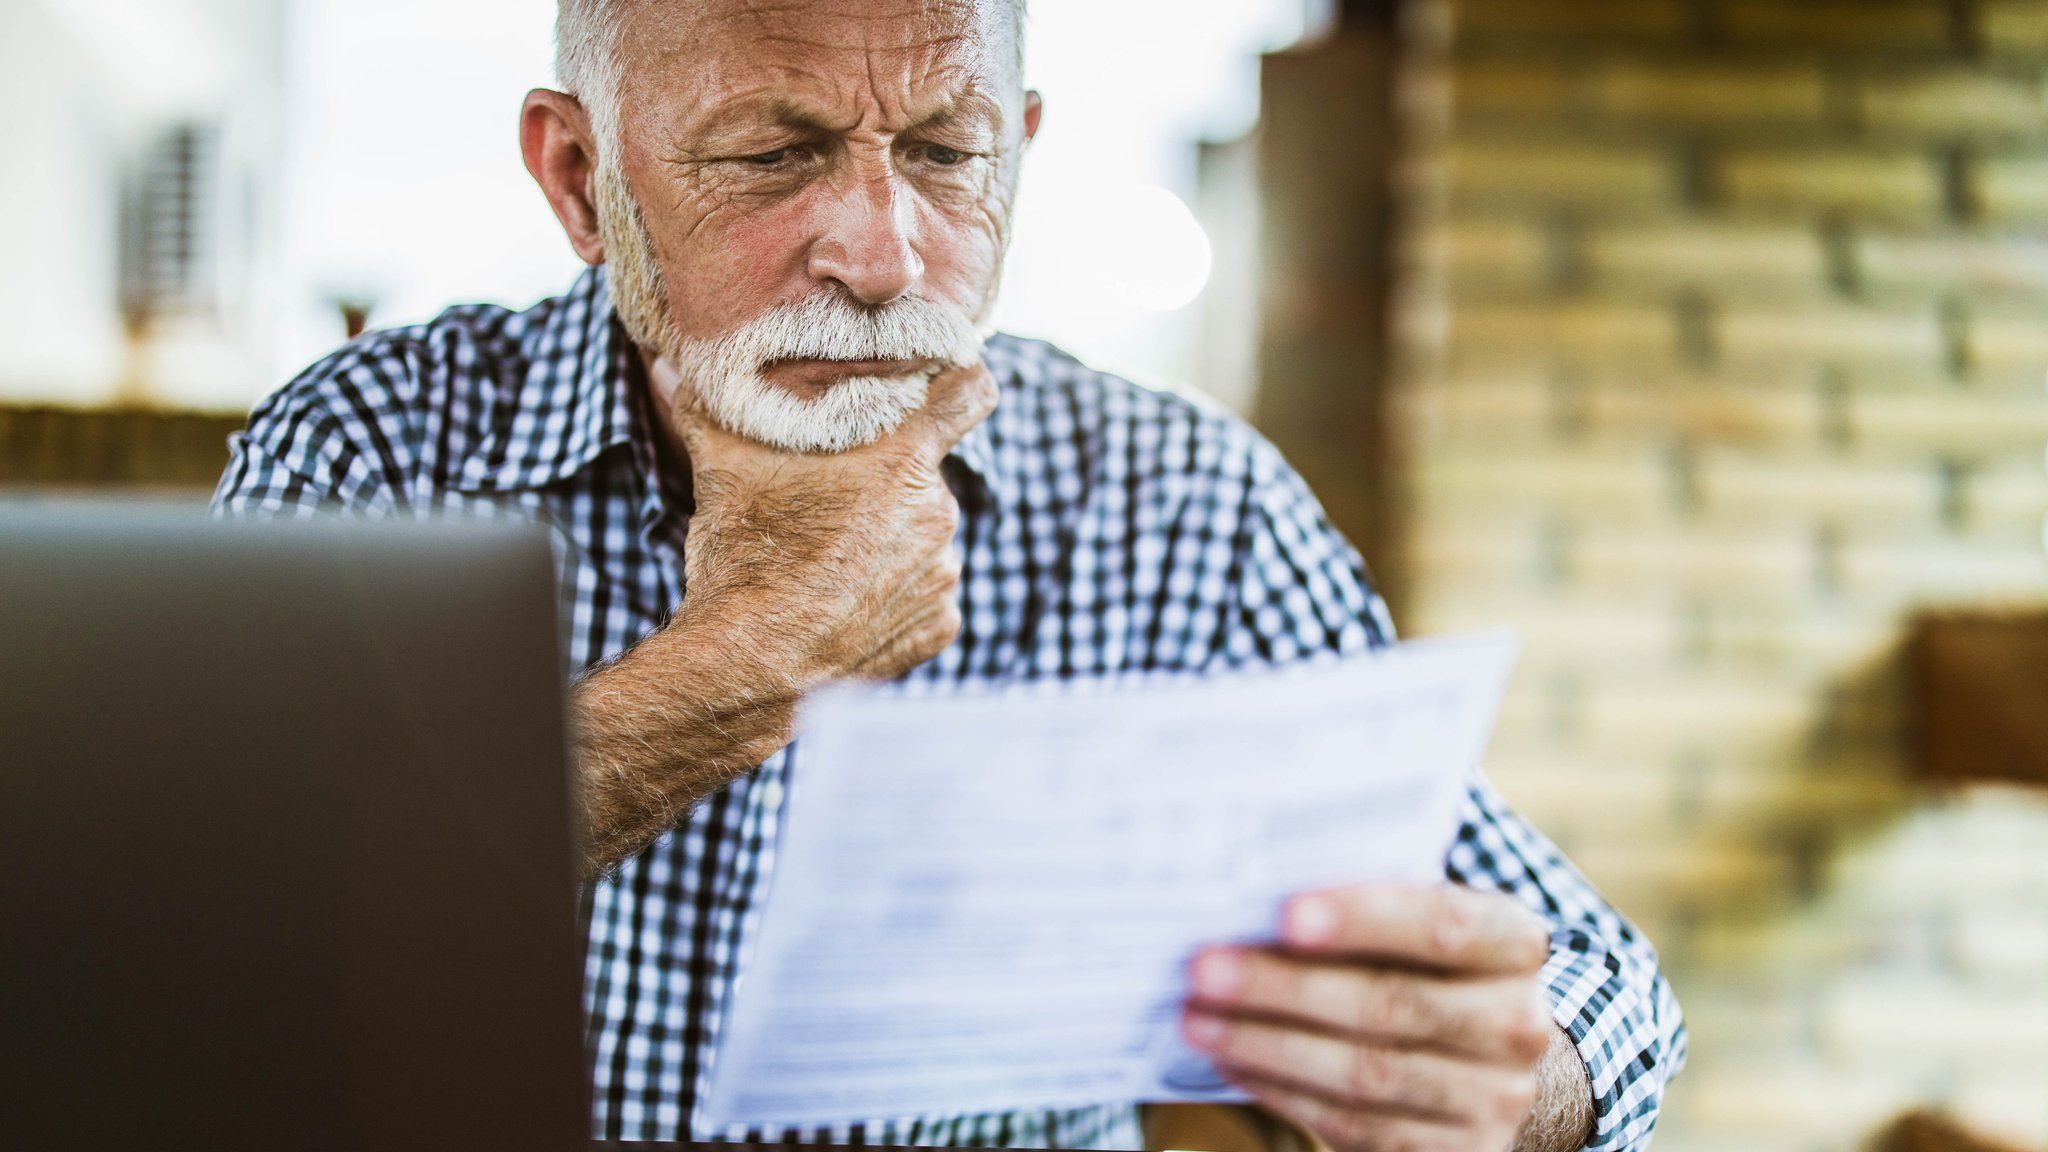 A man looks through financial paperwork